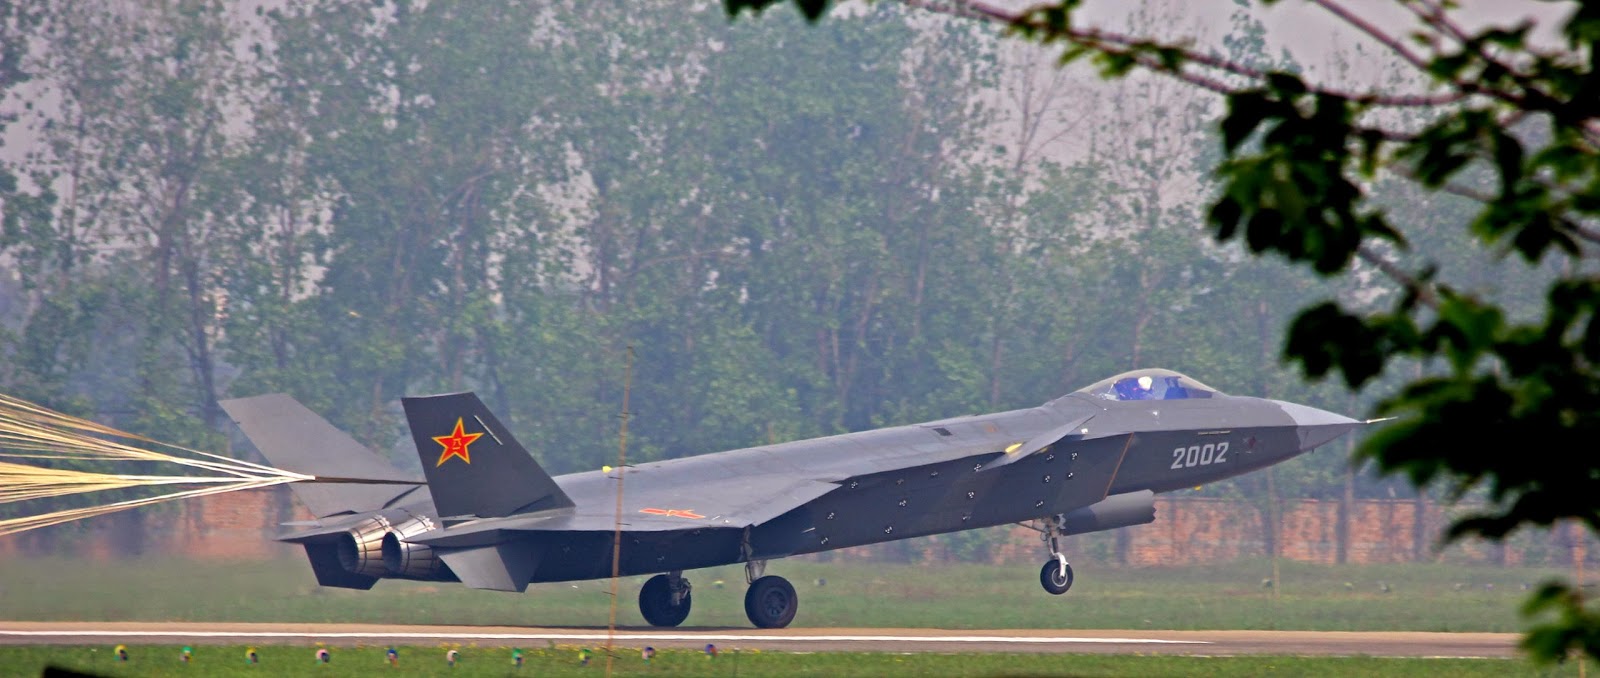 Más detalles del Chengdu J-20 - Página 12 J-20+20023456J-20+2004+-+25.9.13+J-20+20023456789+-+open+MAIN+SIDE+bay+2+PL-12+PL-10+PL-15+J-20+Mighty+Dragon++Chengdu+J-20+fifth+generation+stealth,+engine+fighter+People's+Liberation+Army+Air+Force+(2)